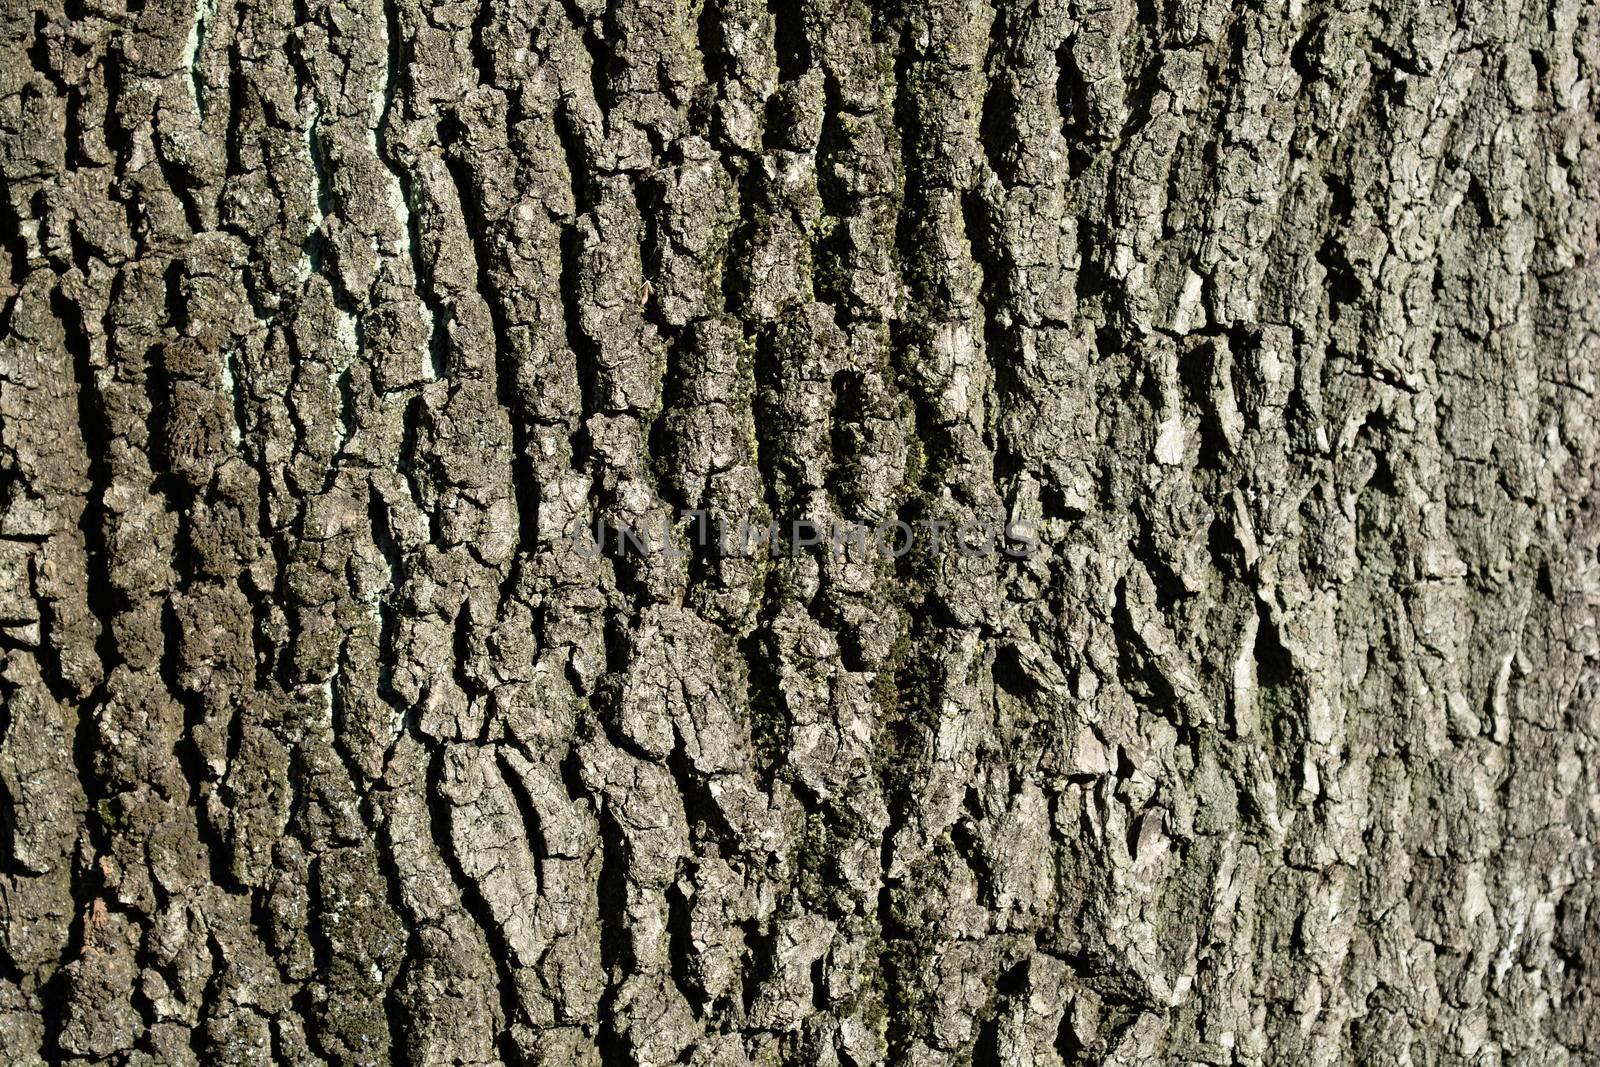 English oak bark detail - Latin name - Quercus robur Fastigiata